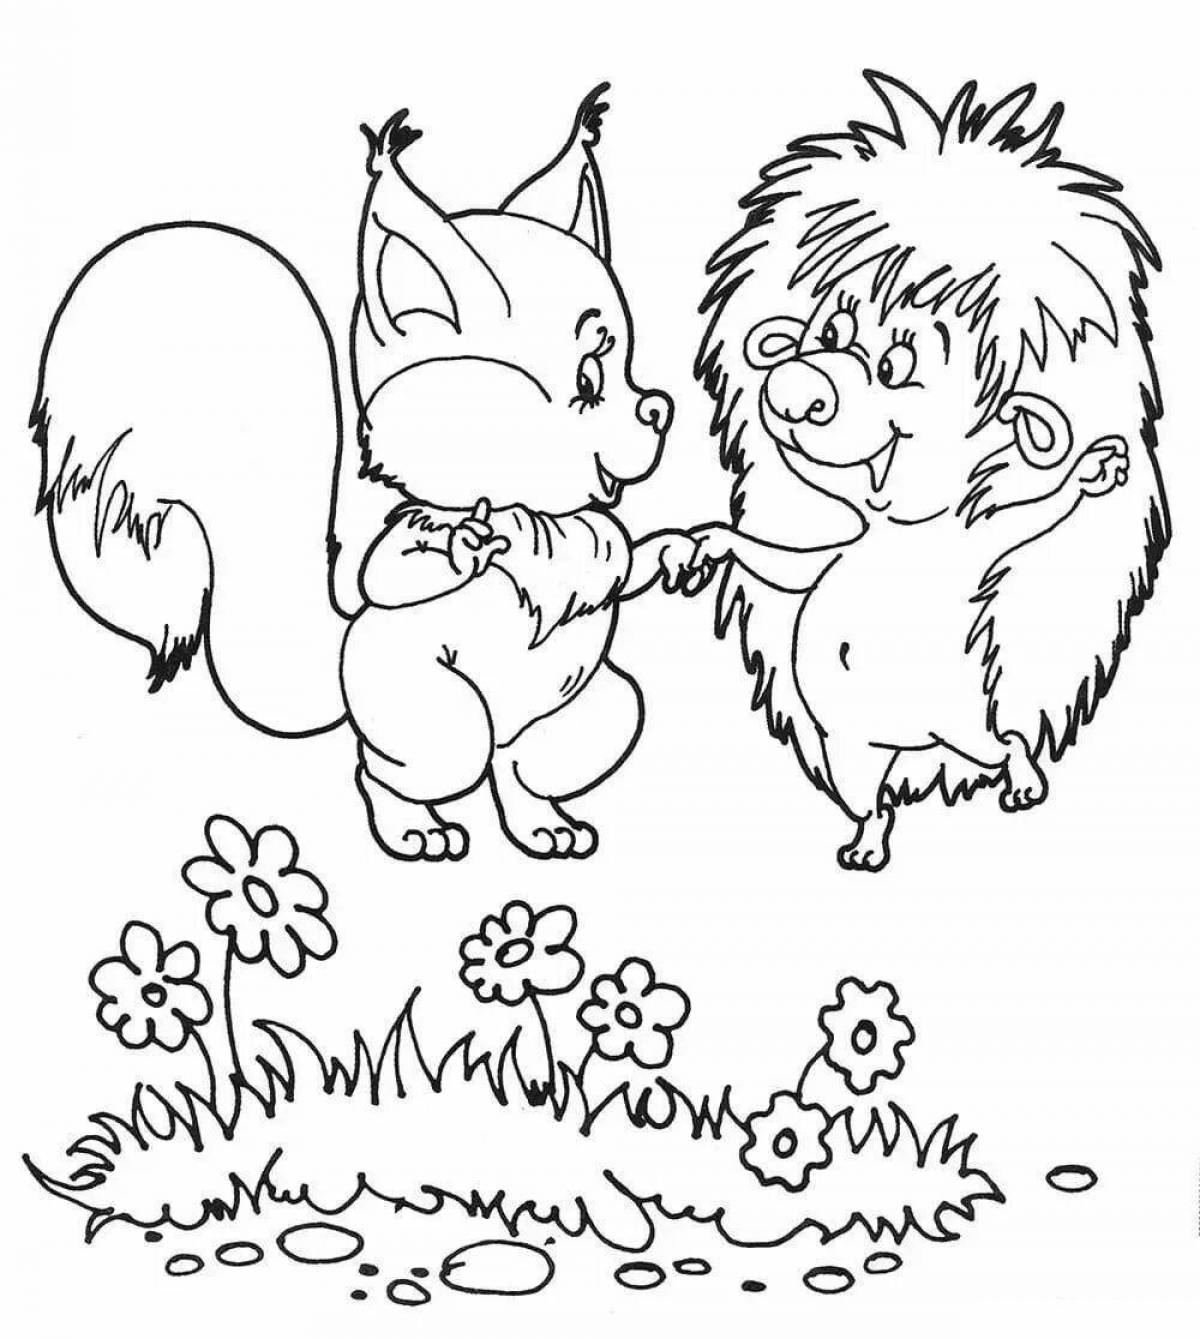 Fancy coloring hedgehog and teddy bear